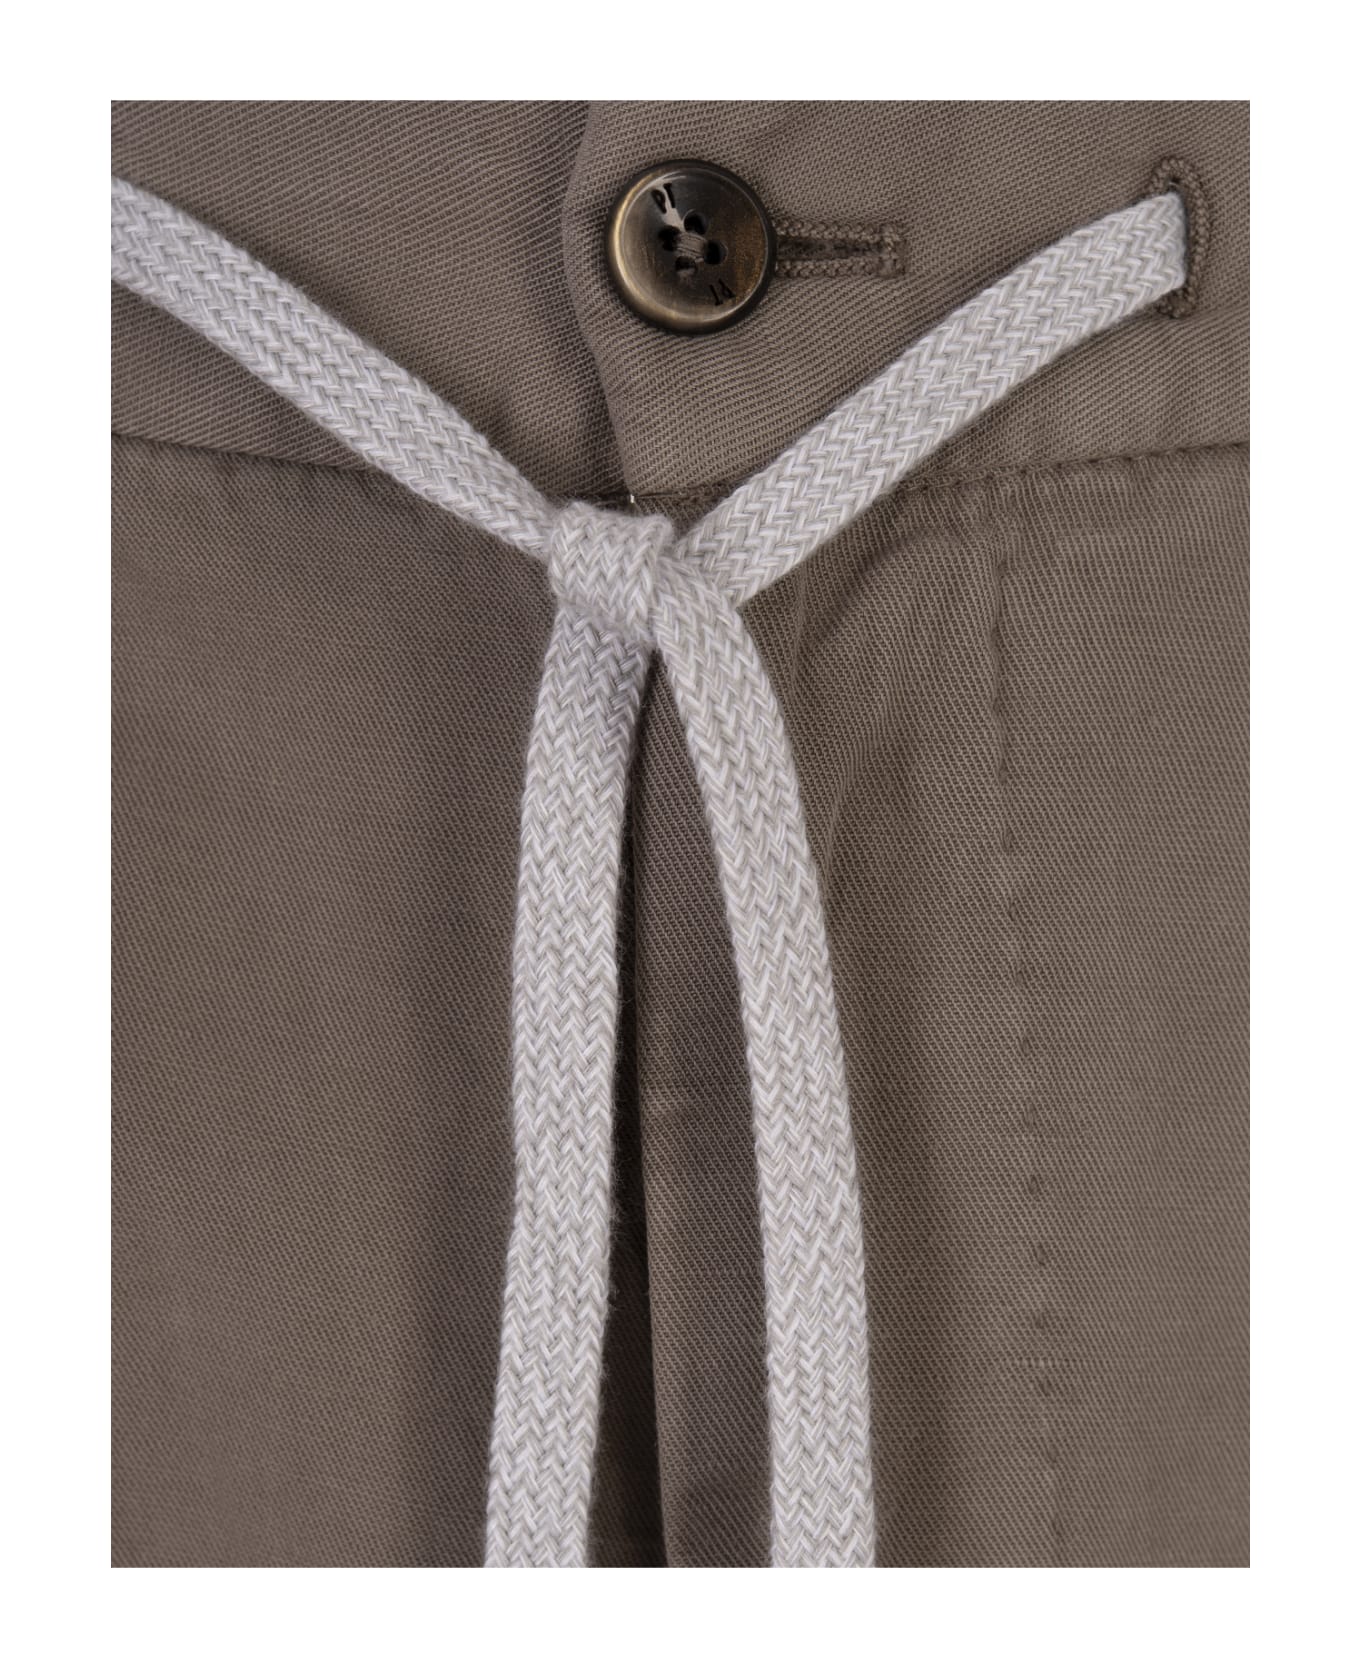 PT Torino Mud Linen Blend Soft Fit Trousers - Brown